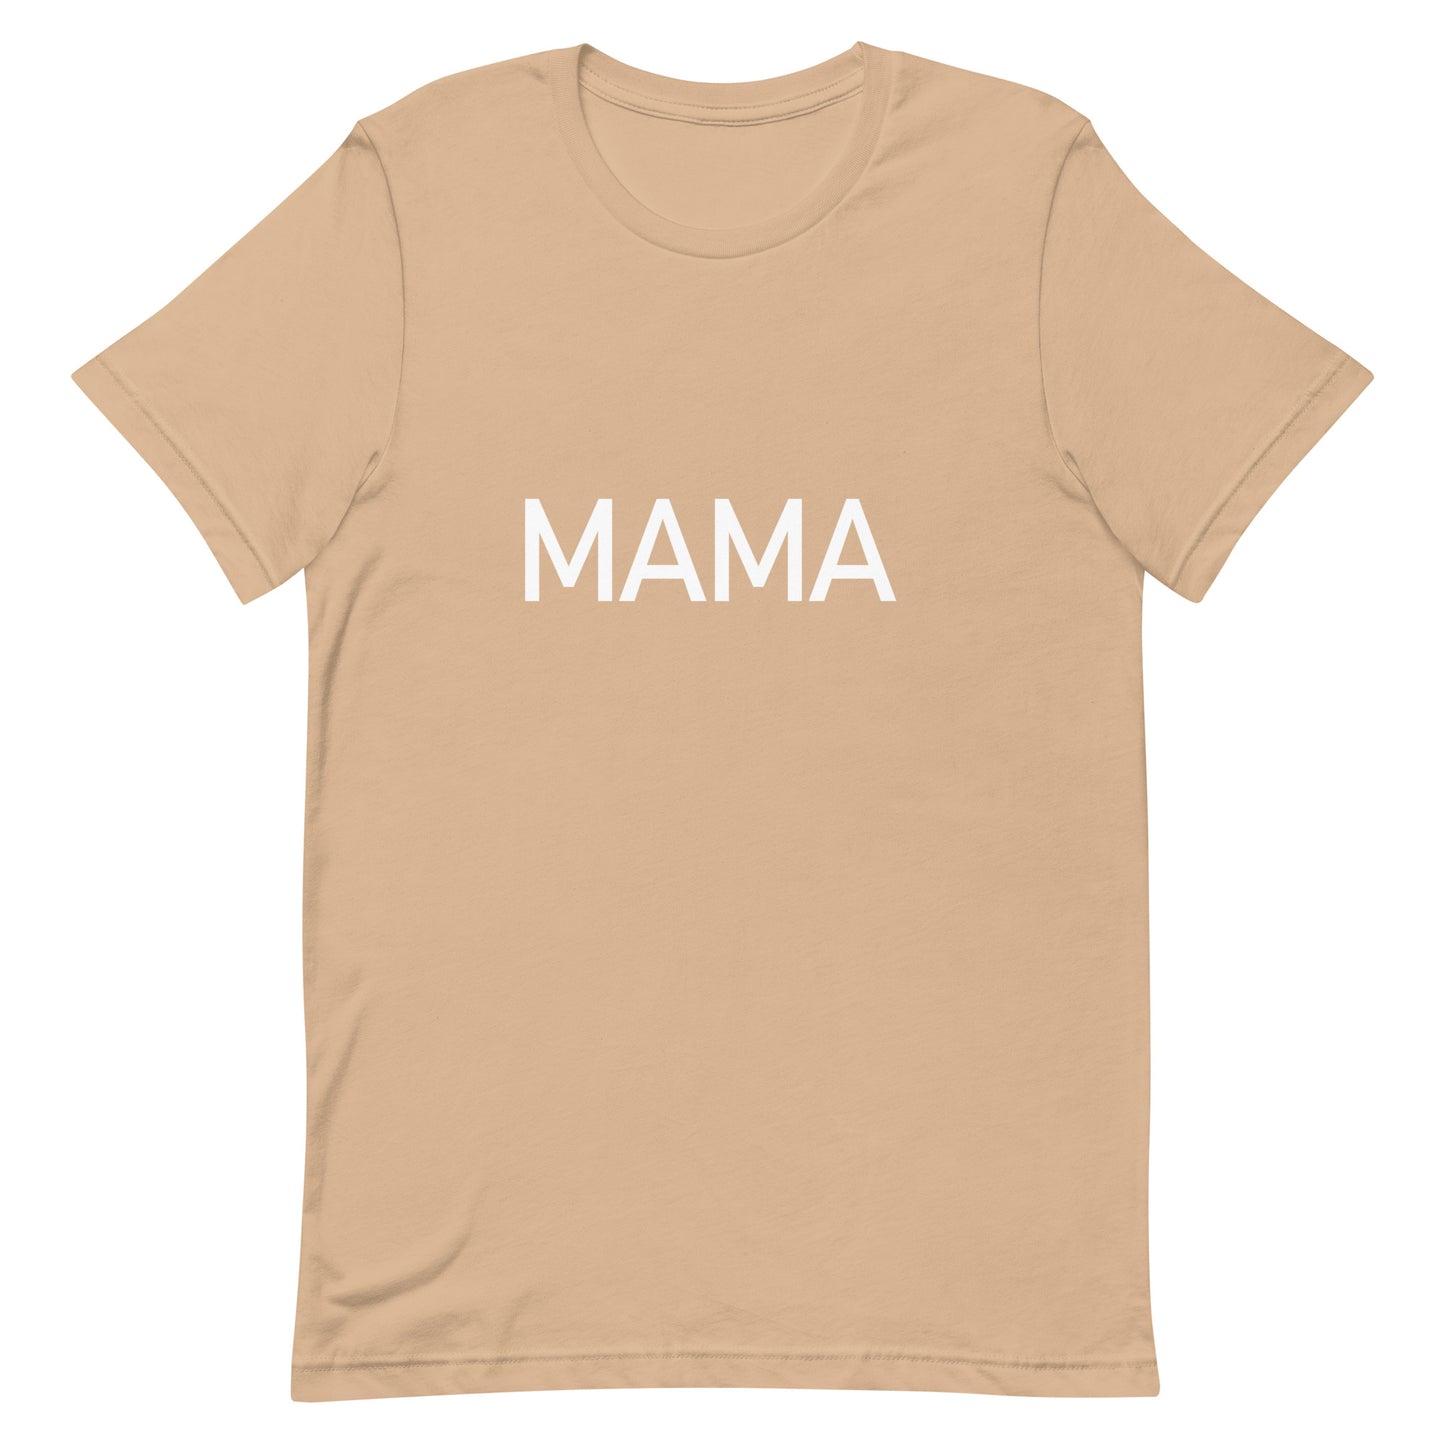 Mama White - Sustainably Made Women’s Short Sleeve Tee